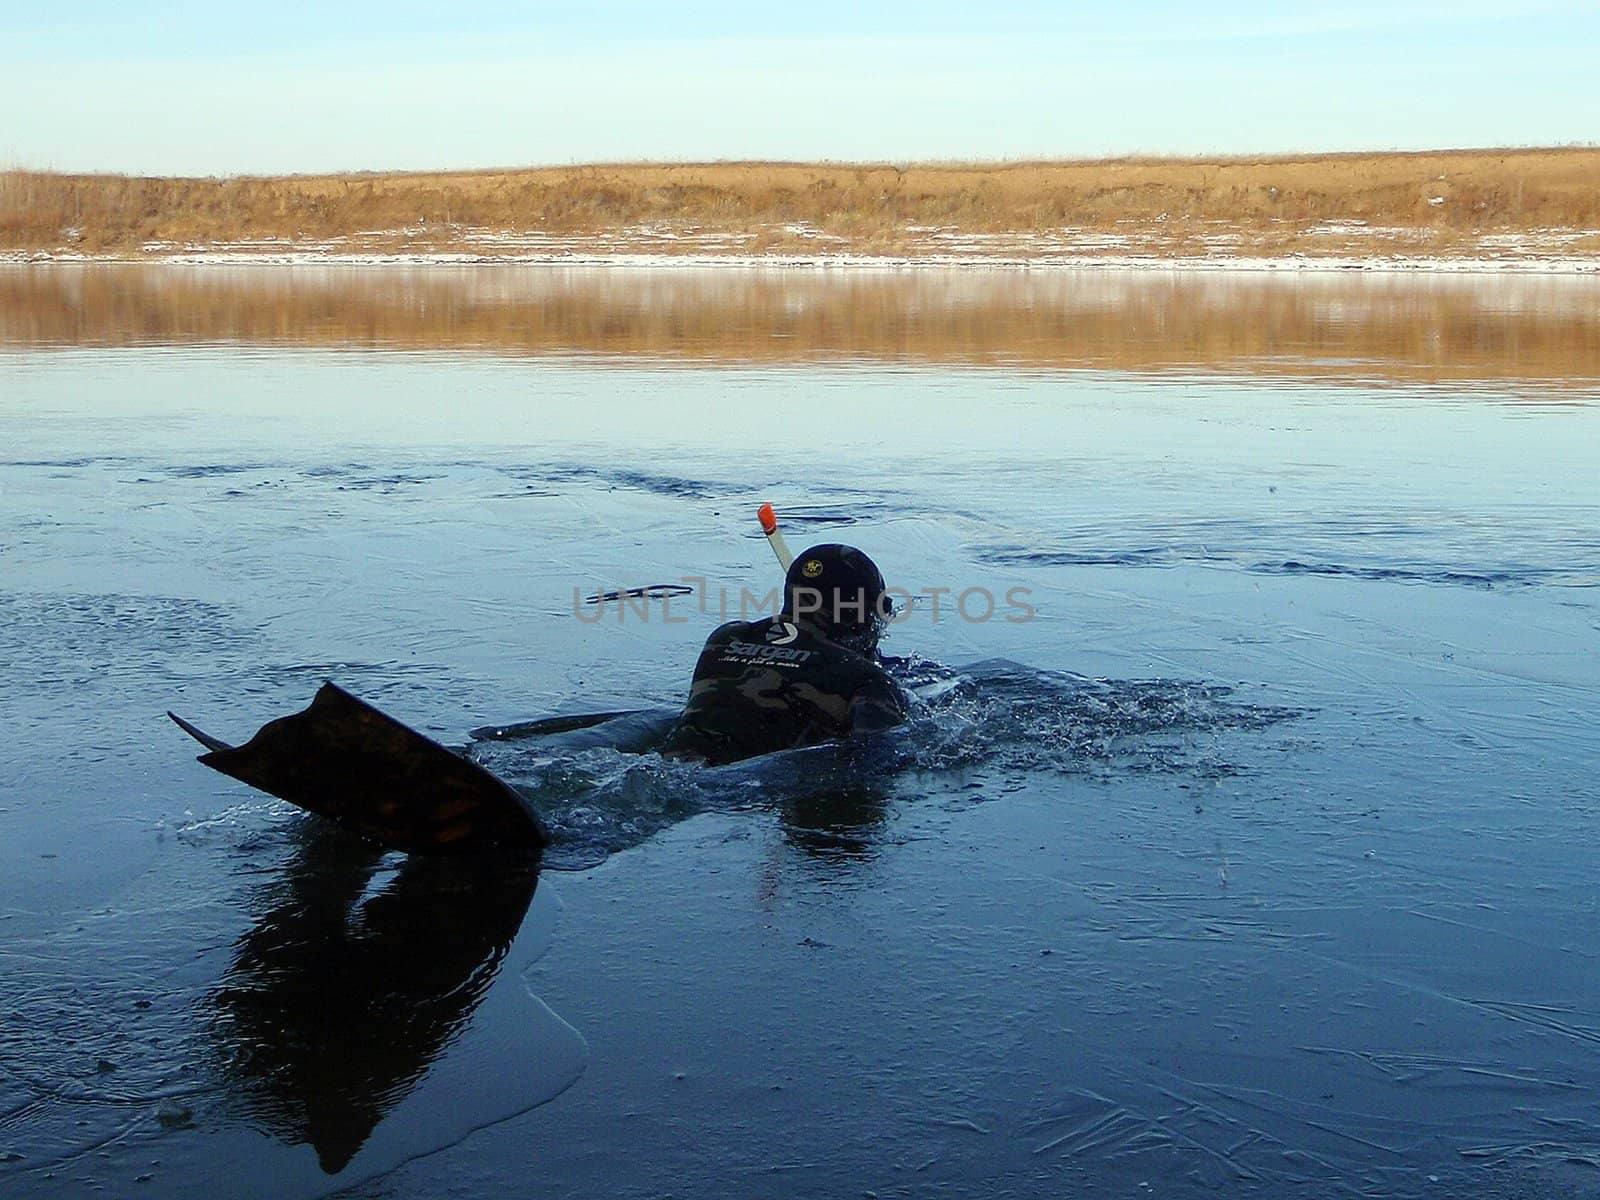 We dive on the winter river Belaya, Russia, Bashkortostan